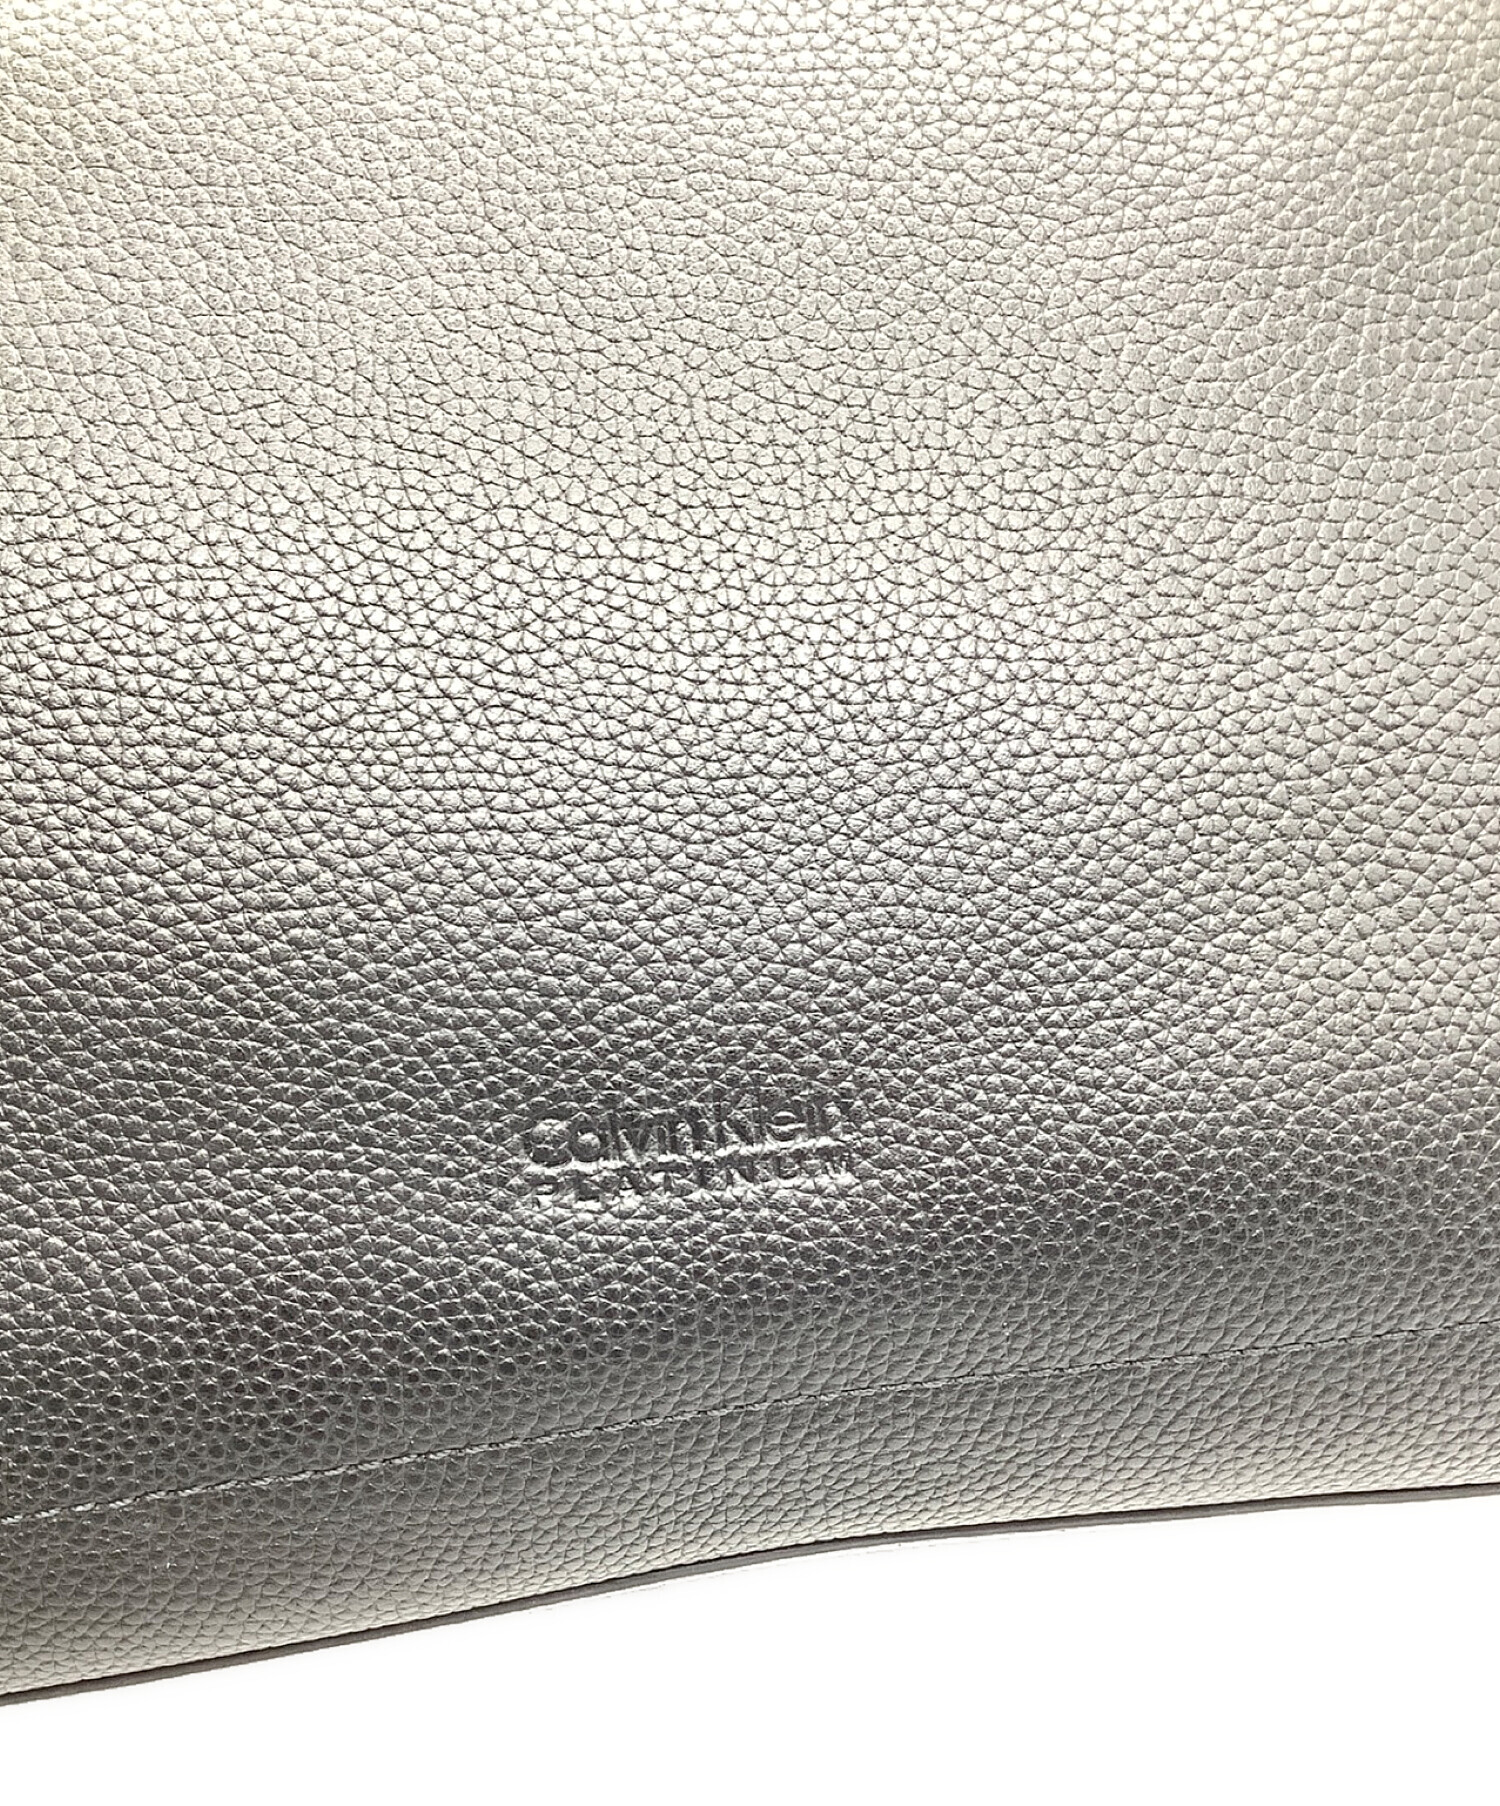 Calvin Klein platinum (カルバンクラインプラチナム) ブリーフケース ブラック 未使用品